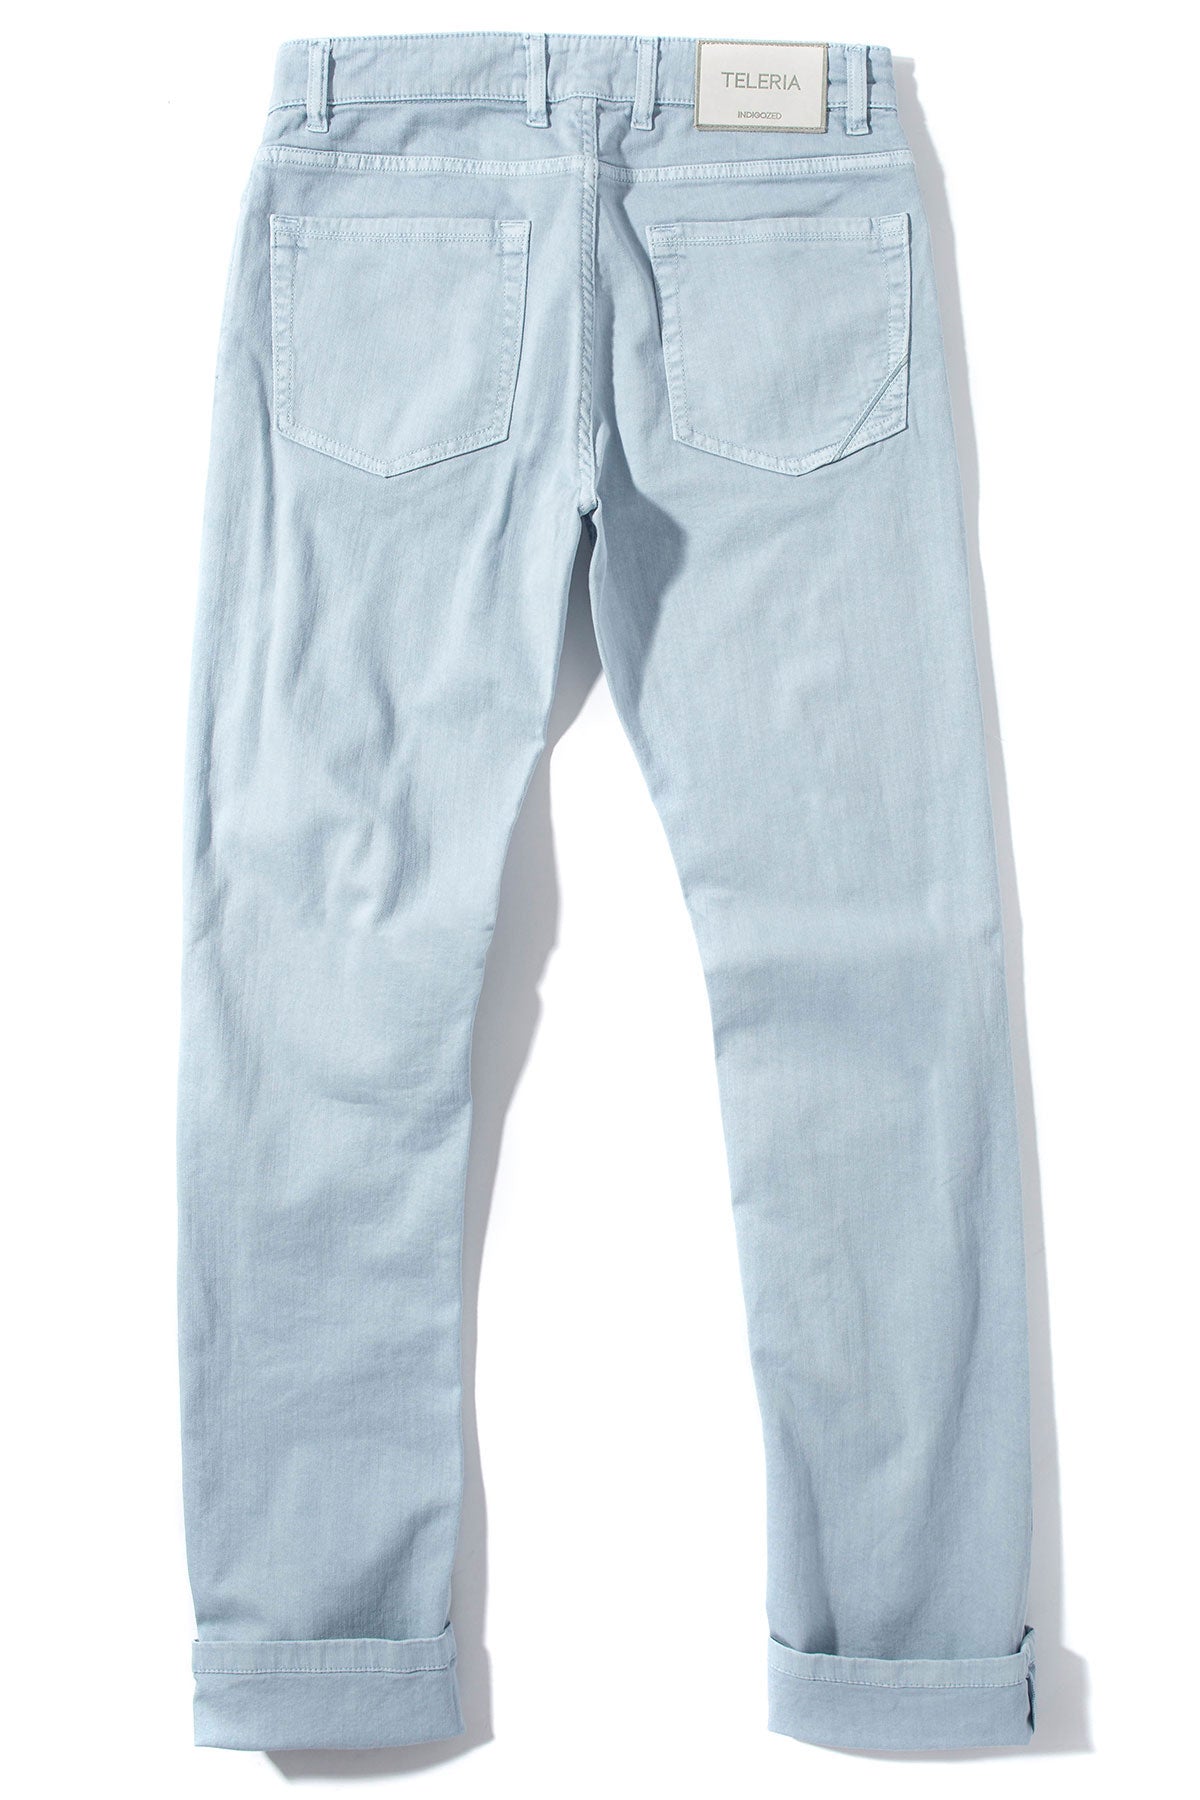 Ouray 5 Pocket Denim in Blue Ice | Mens - Pants - 5 Pocket | Teleria Zed